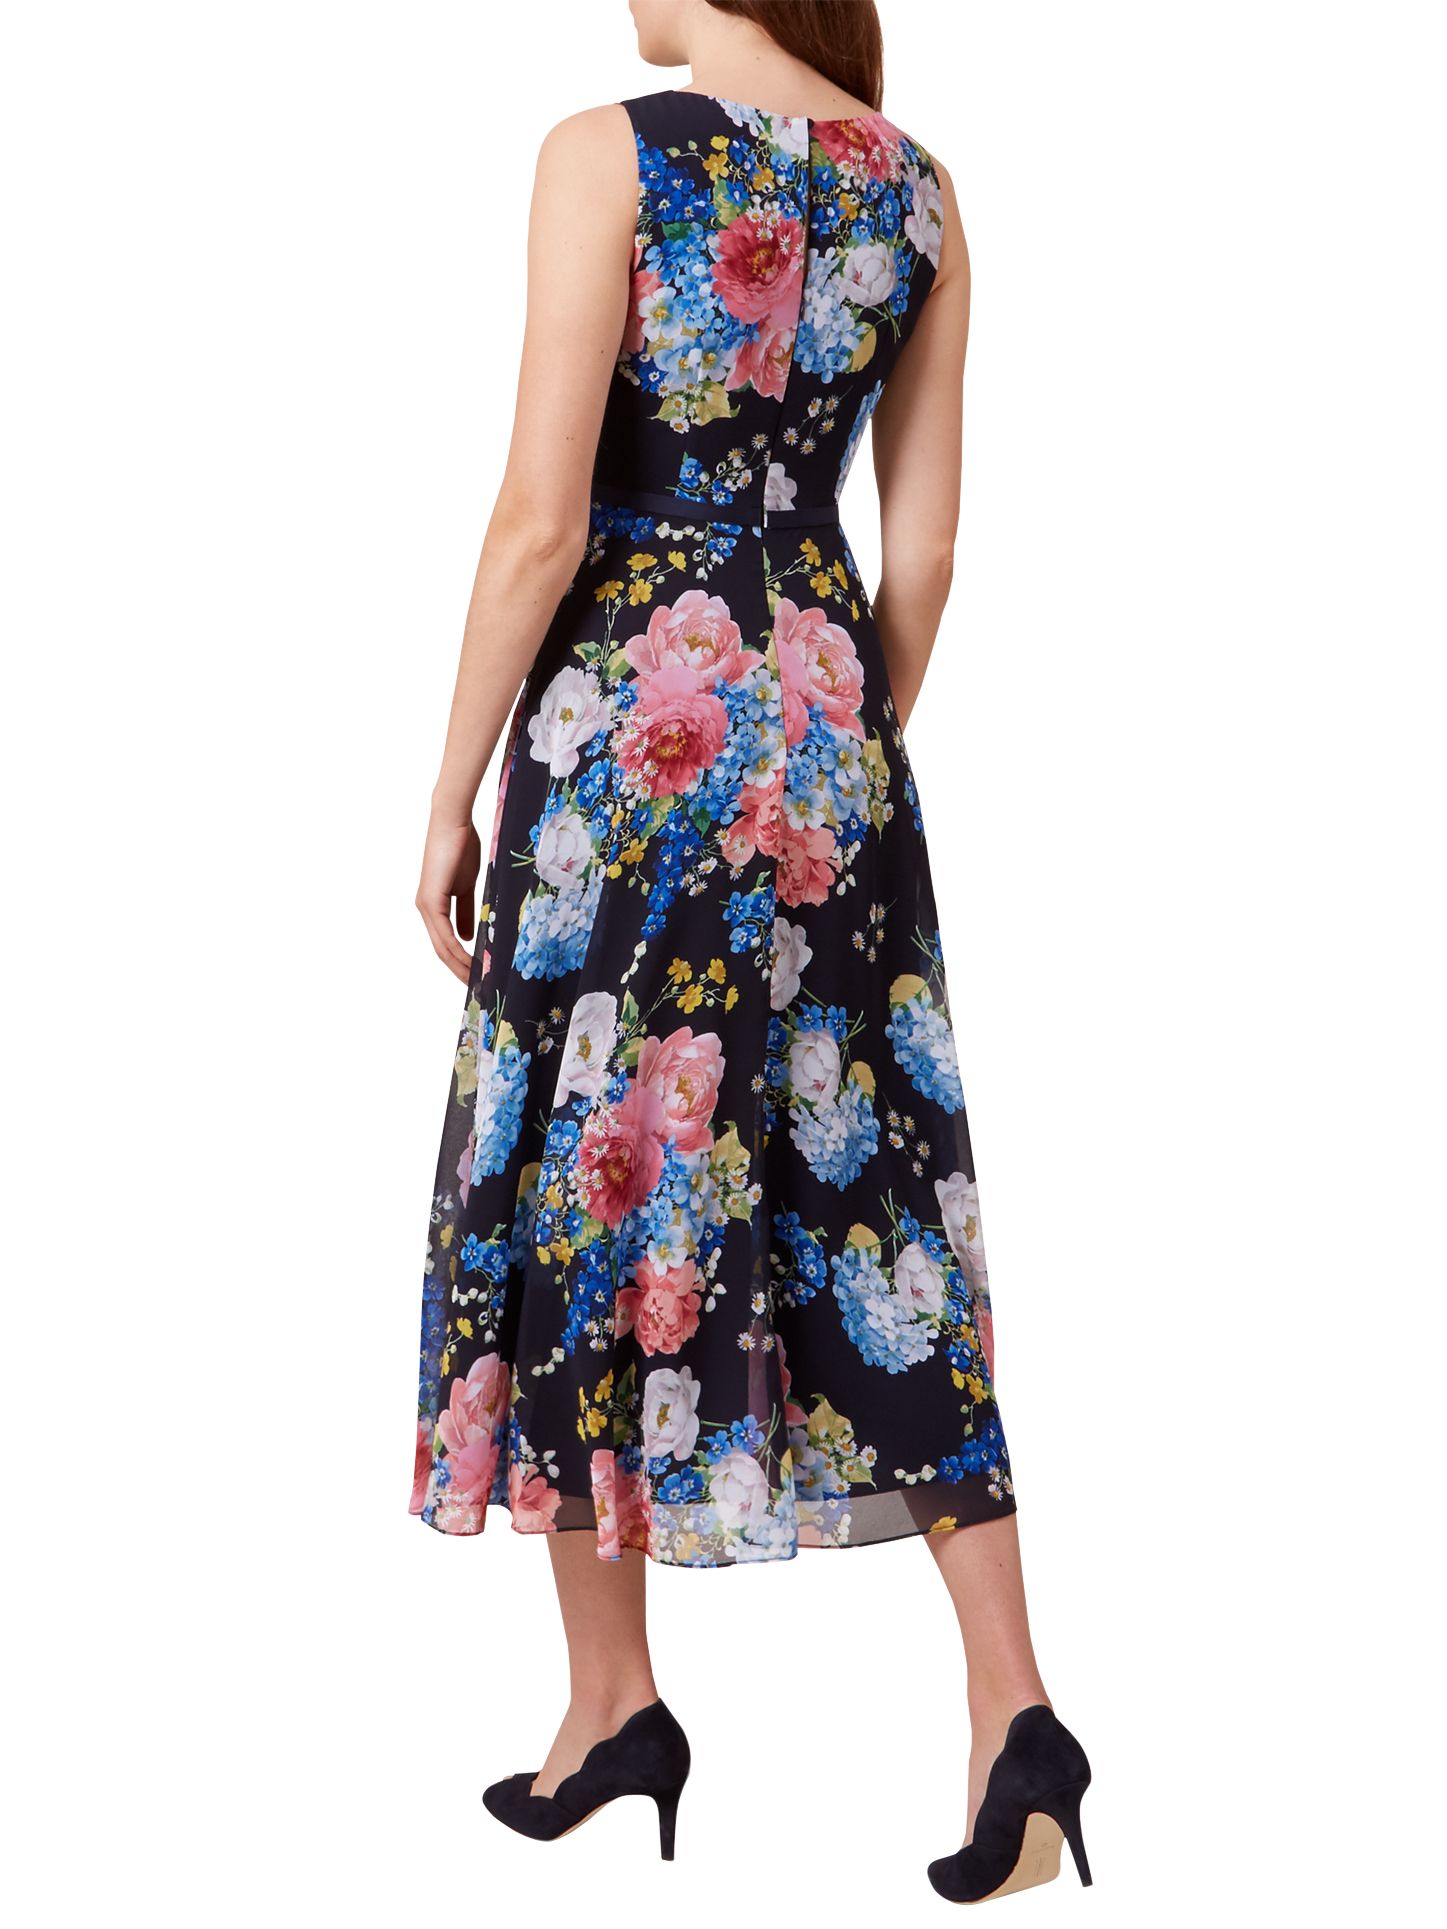 Hobbs Carly Floral Print Midi Dress, Navy/Multi